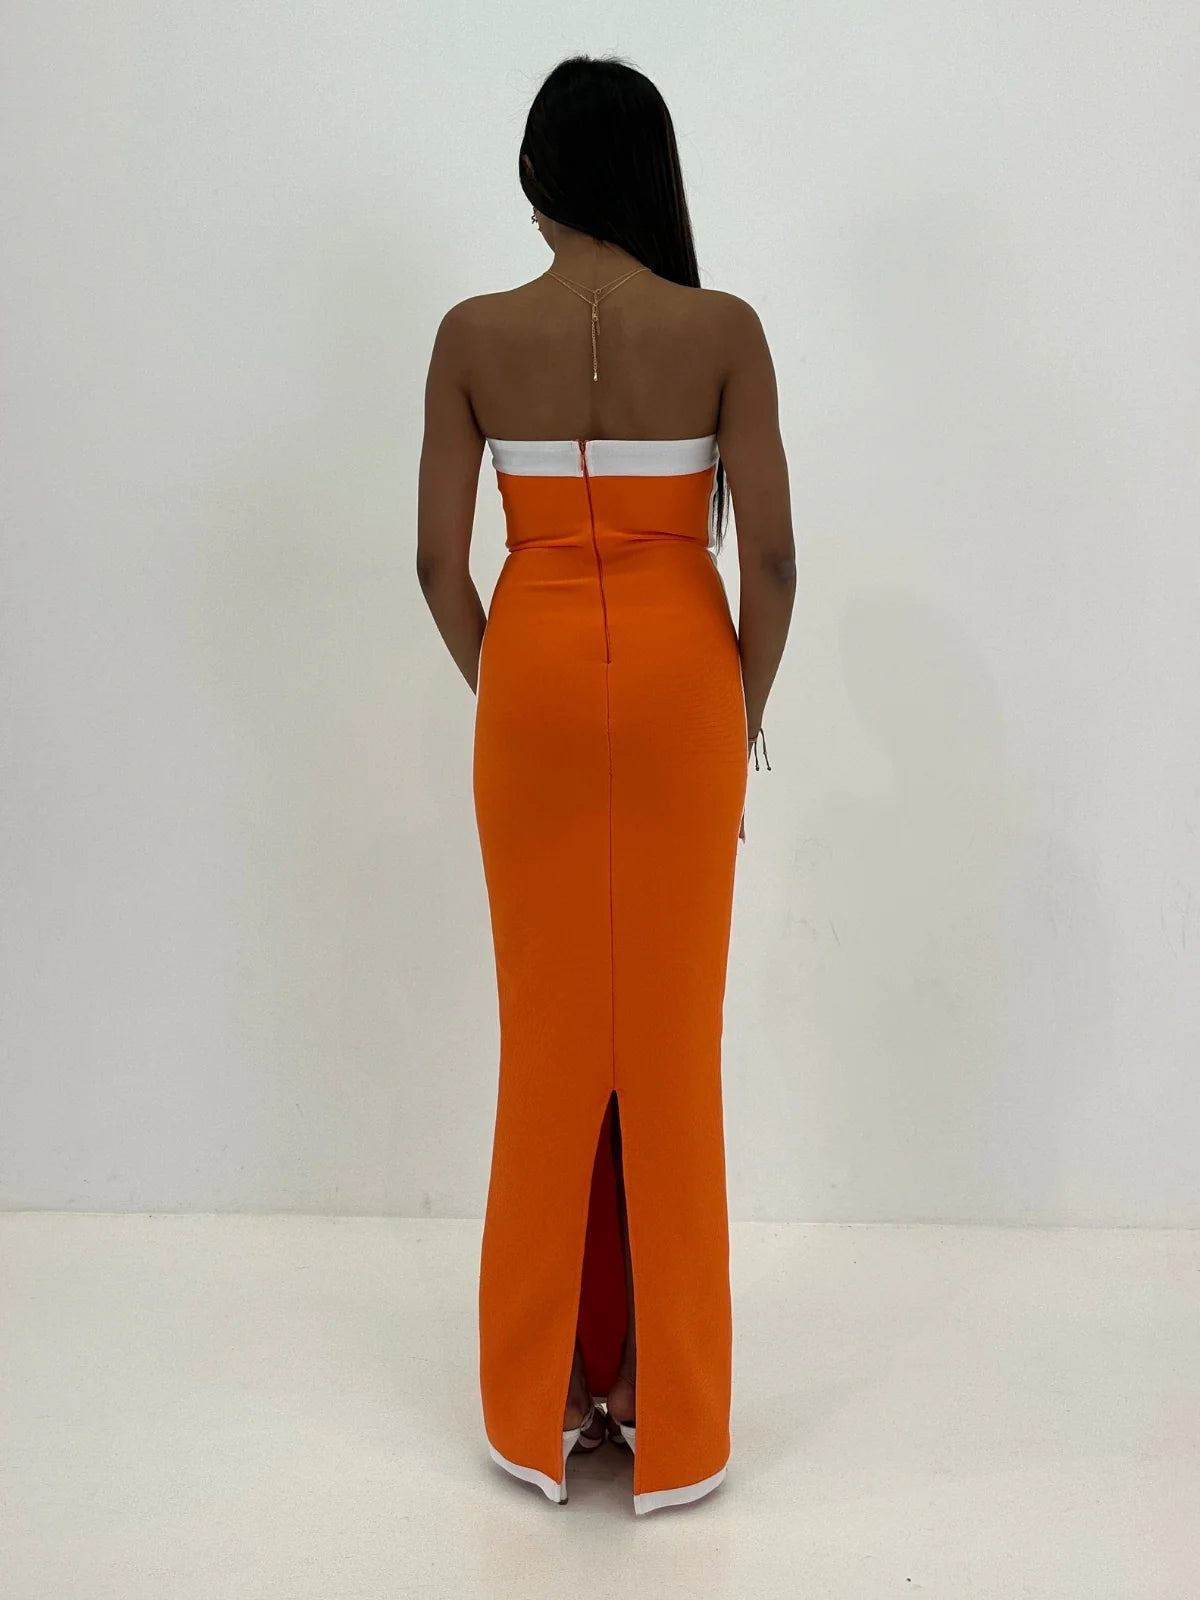 Ashley Dress Orange - FOR SALE